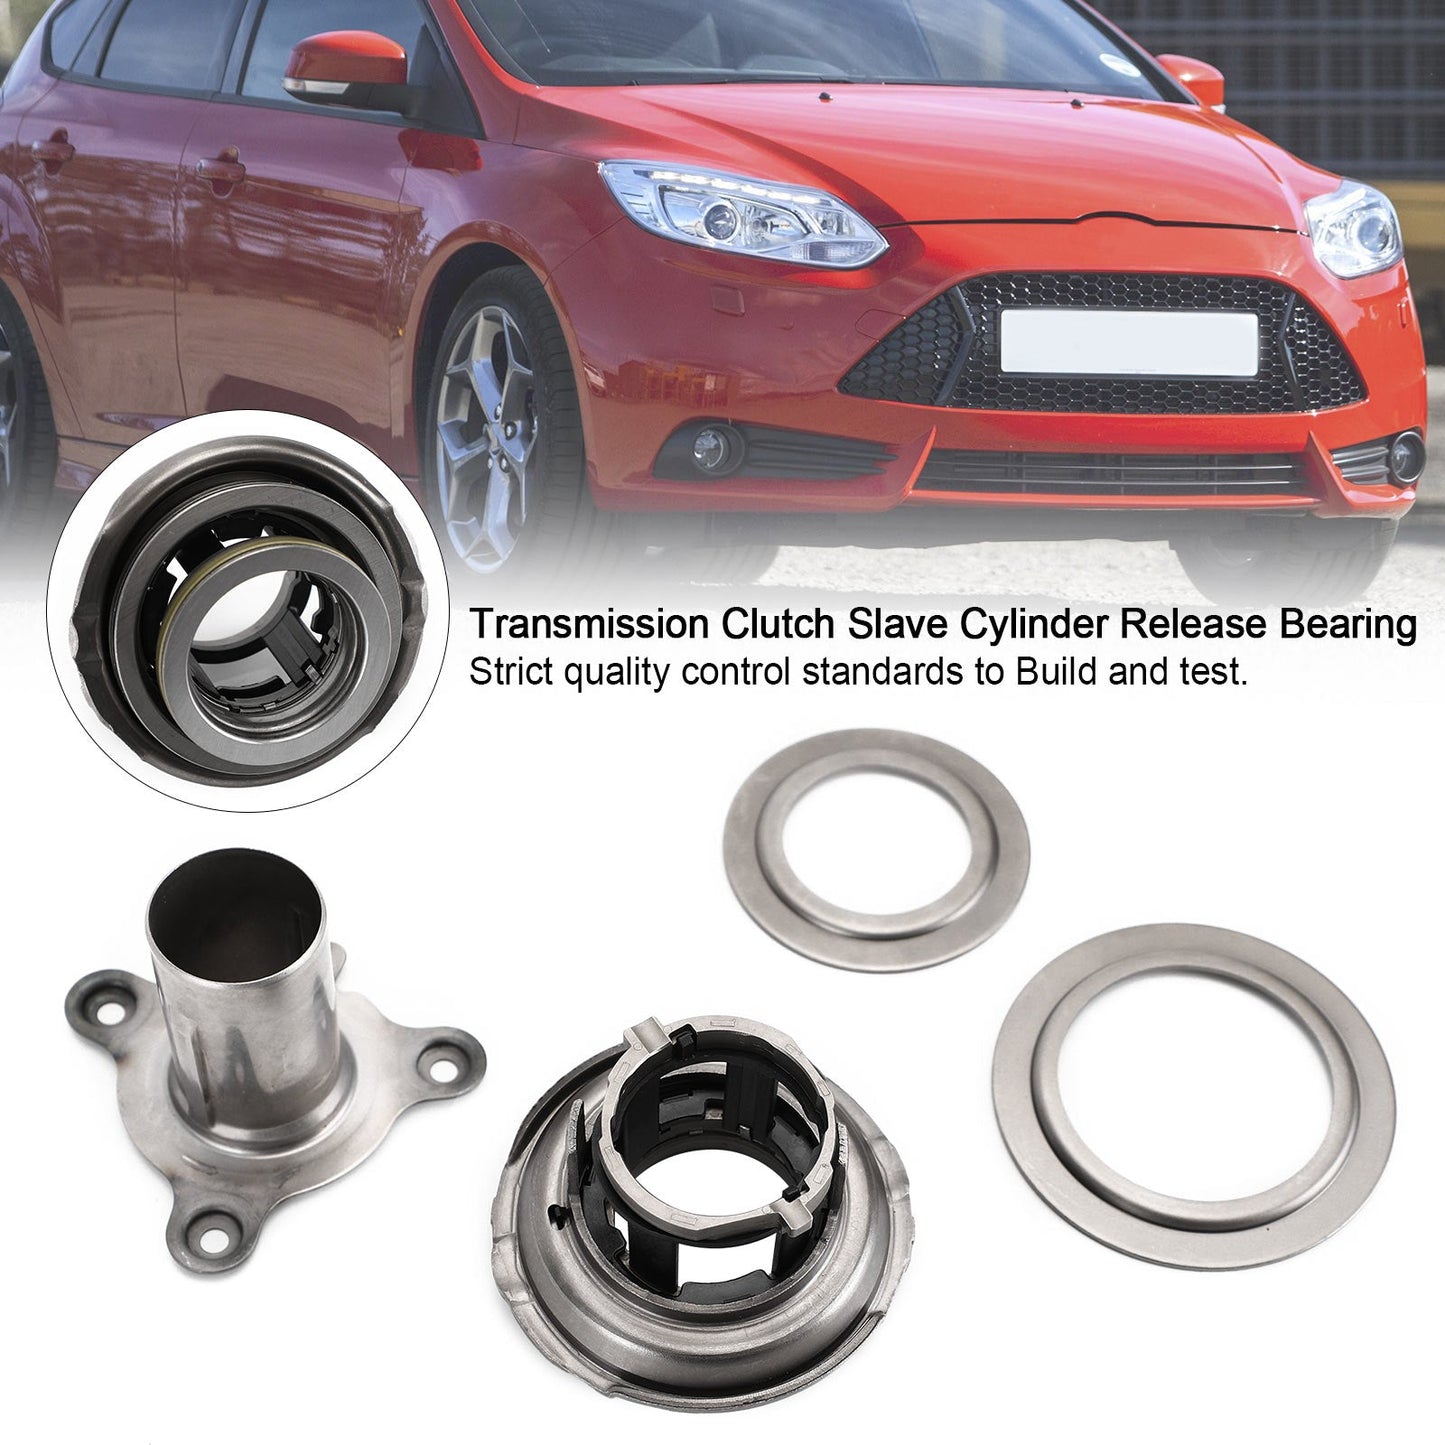 Transmission Clutch Slave Cylinder Release Bearing for Ford Focus 2012-2014=